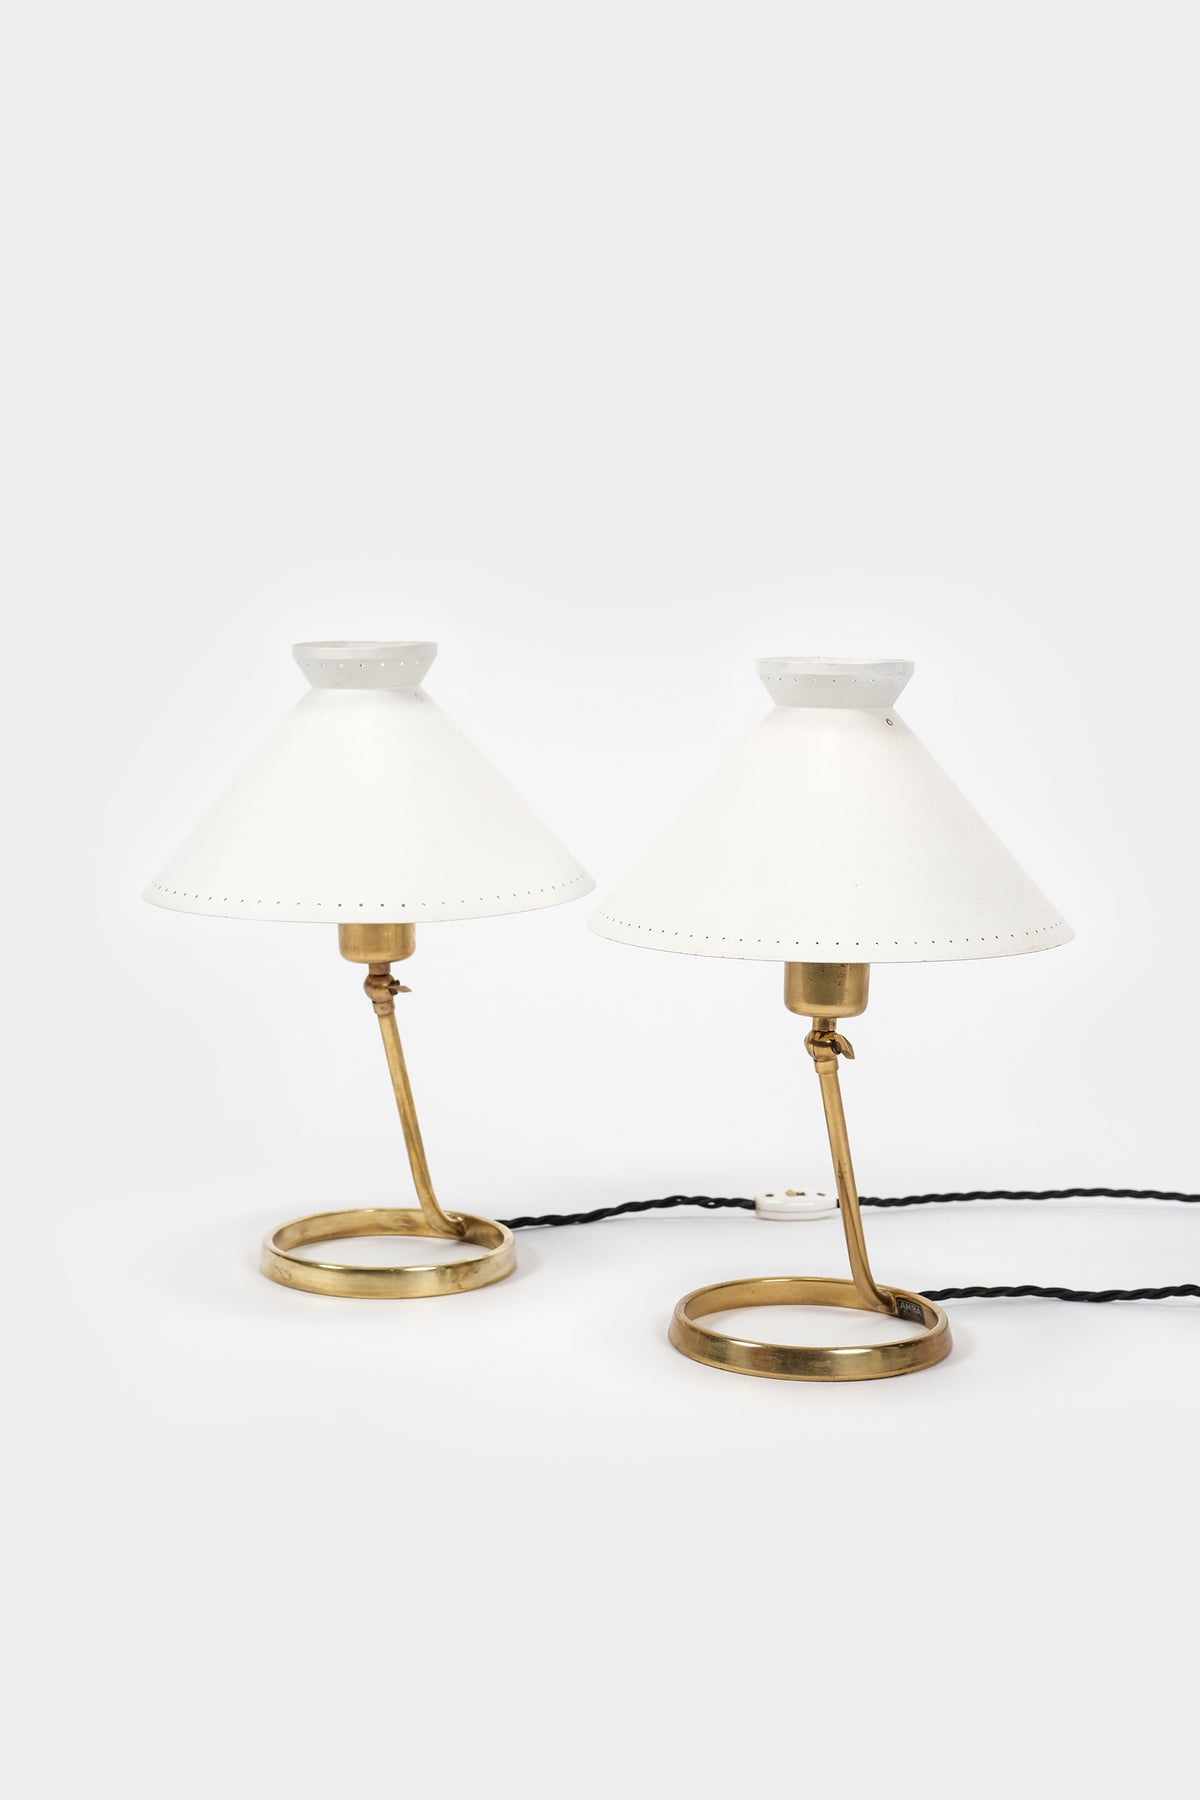 Alfred Müller, Pair Brass Lamps, Amba, Switzerland, 40s